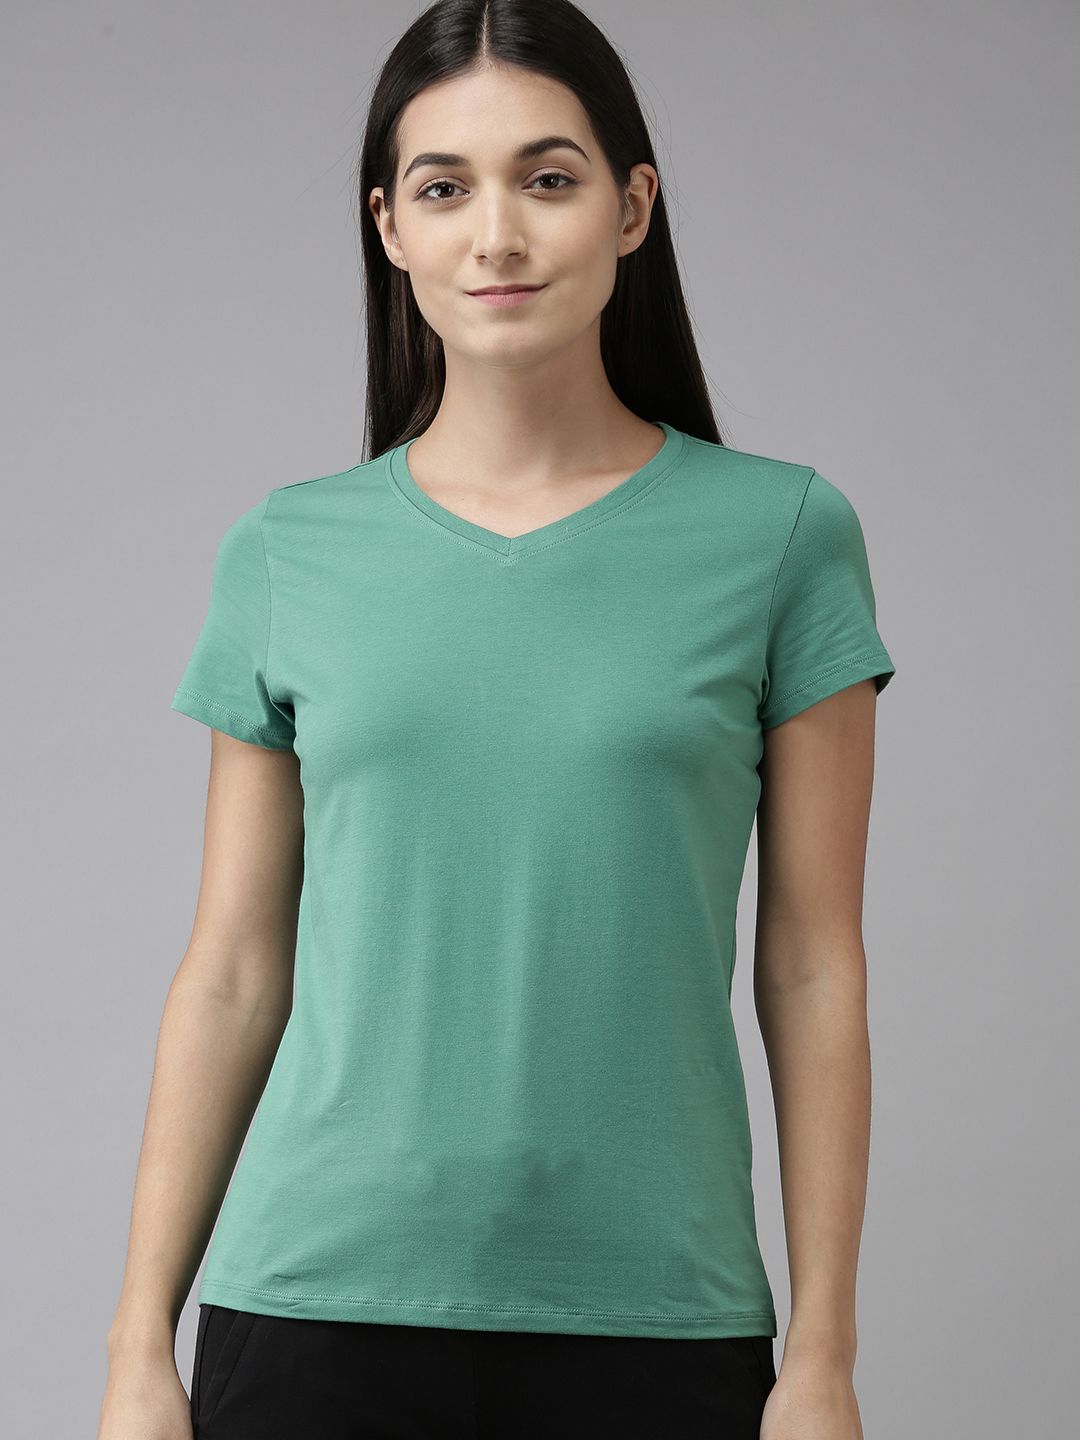 Van Heusen Women Green Solid V-Neck Lounge T-shirt Price in India